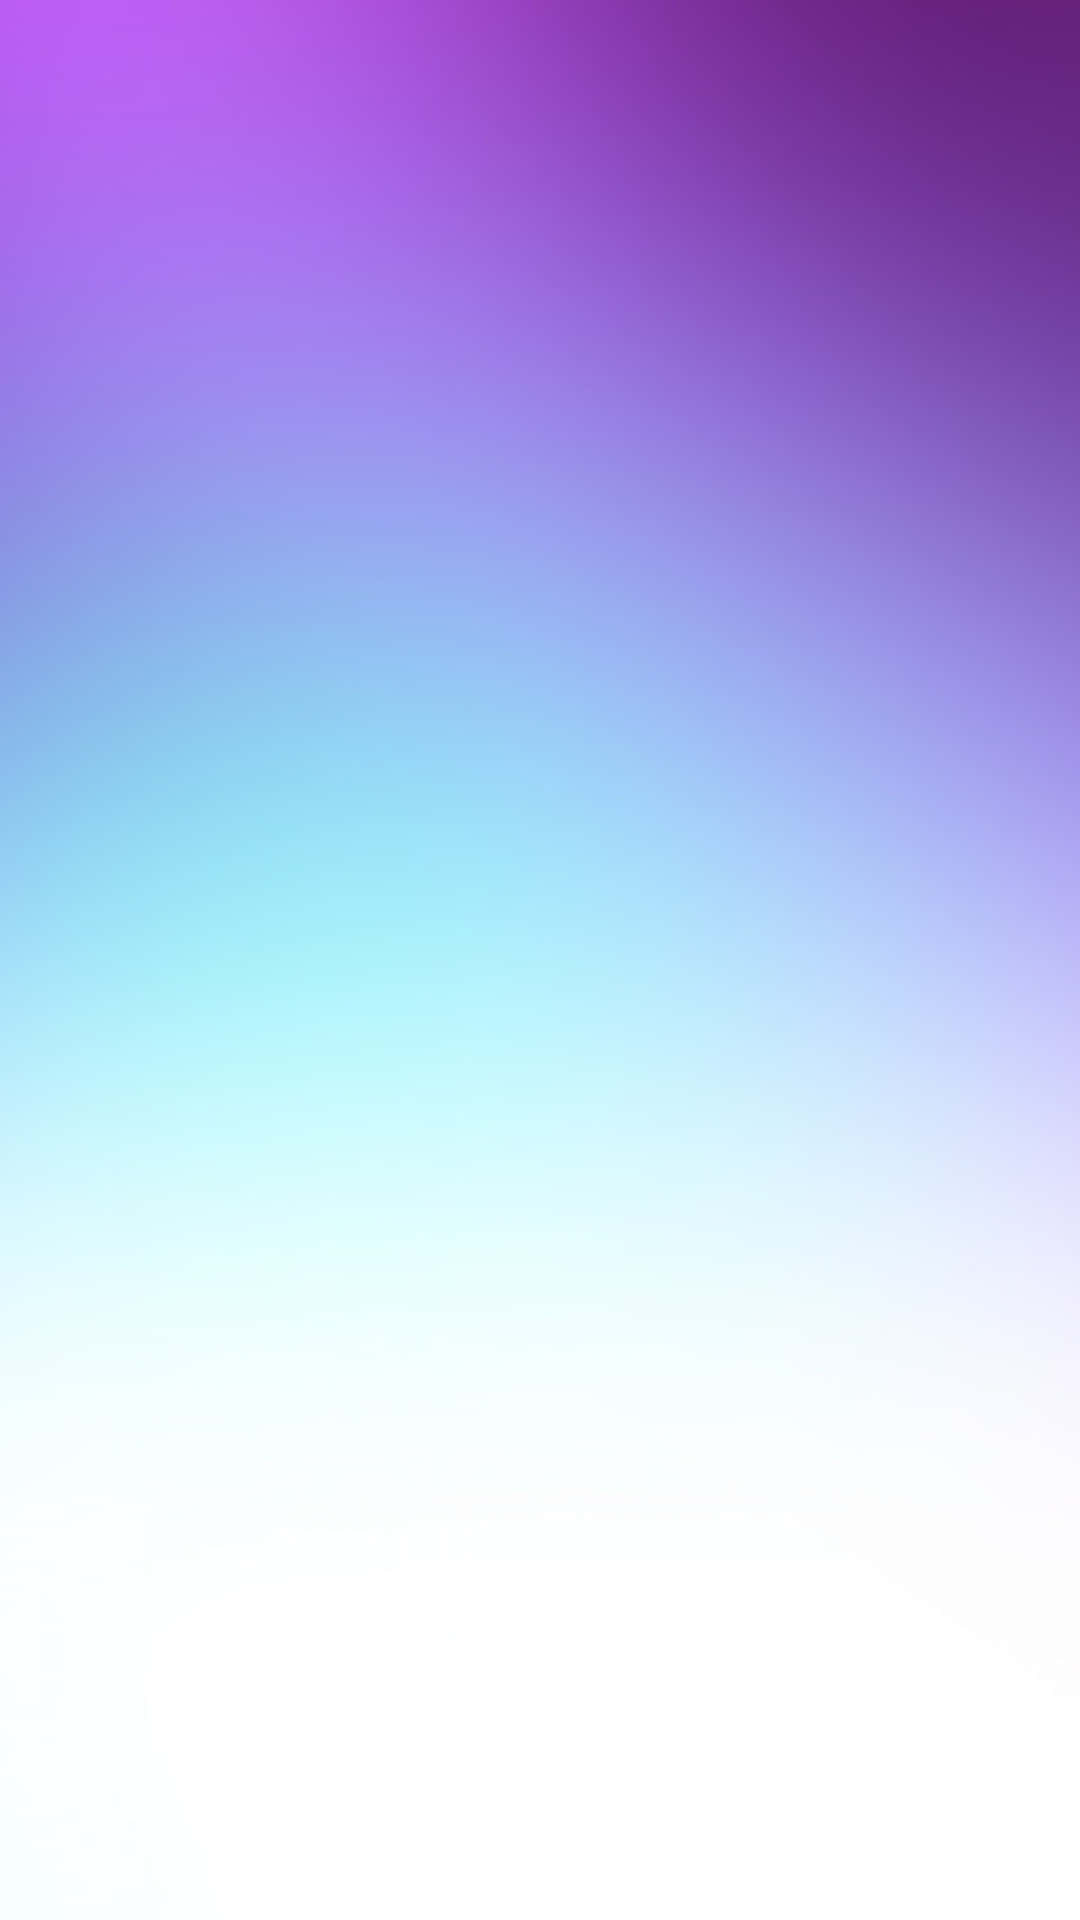 Unefecto Fascinante Degradado Entre Tonos Lujosos De Púrpura Y Azul. Fondo de pantalla